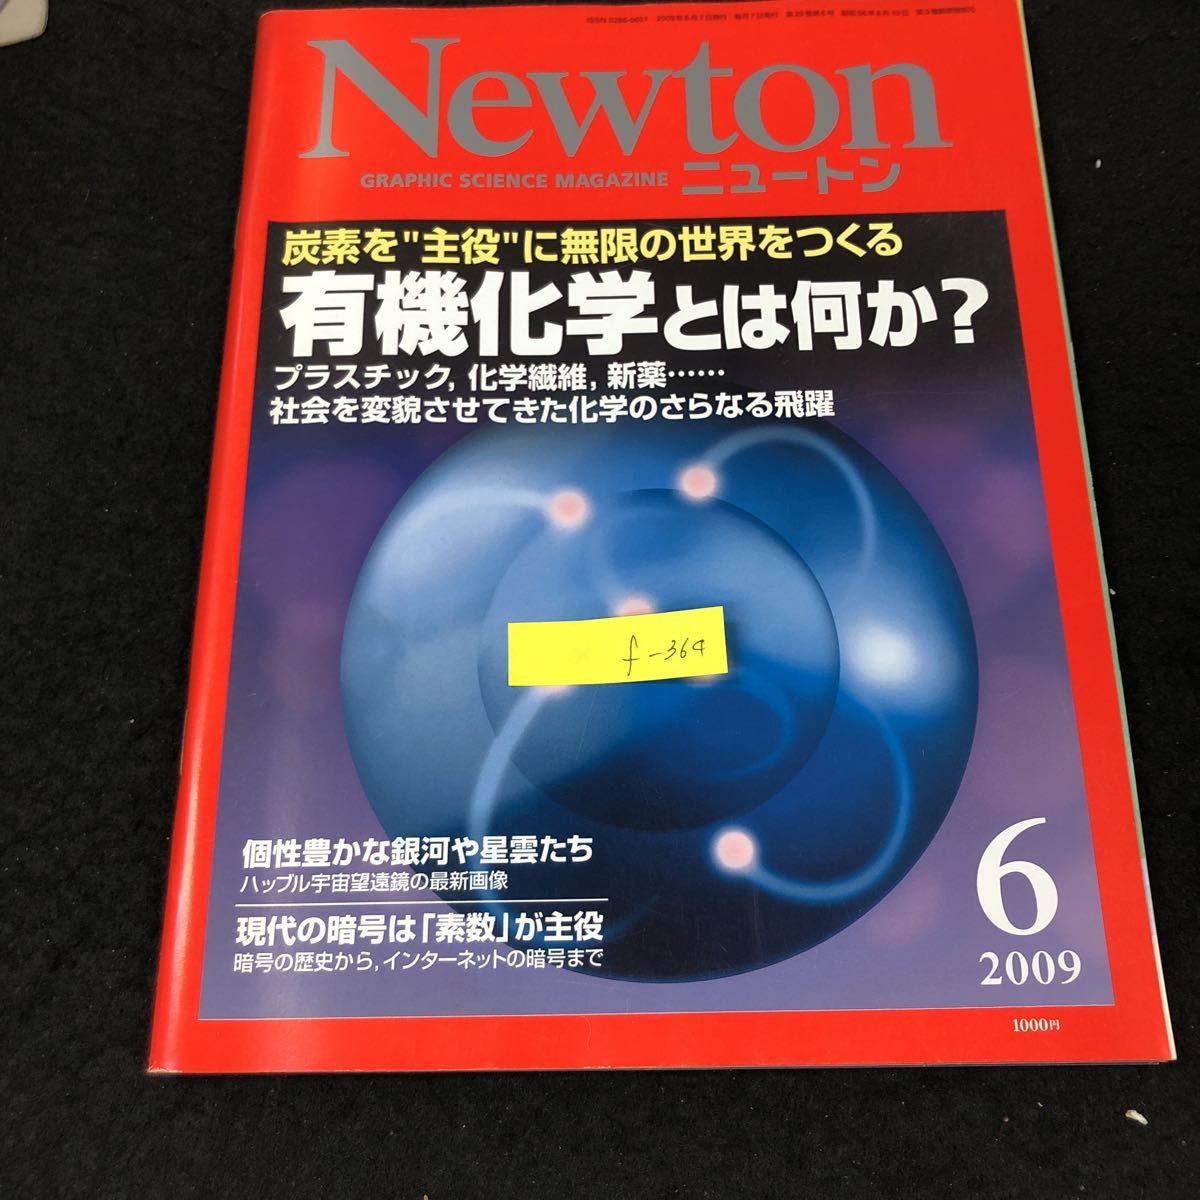 f-364 Newton ニュートン 6月号/Vol.29/No.6 有機化学とは何か 株式会社ニュートンプレス 2009年発行※4 